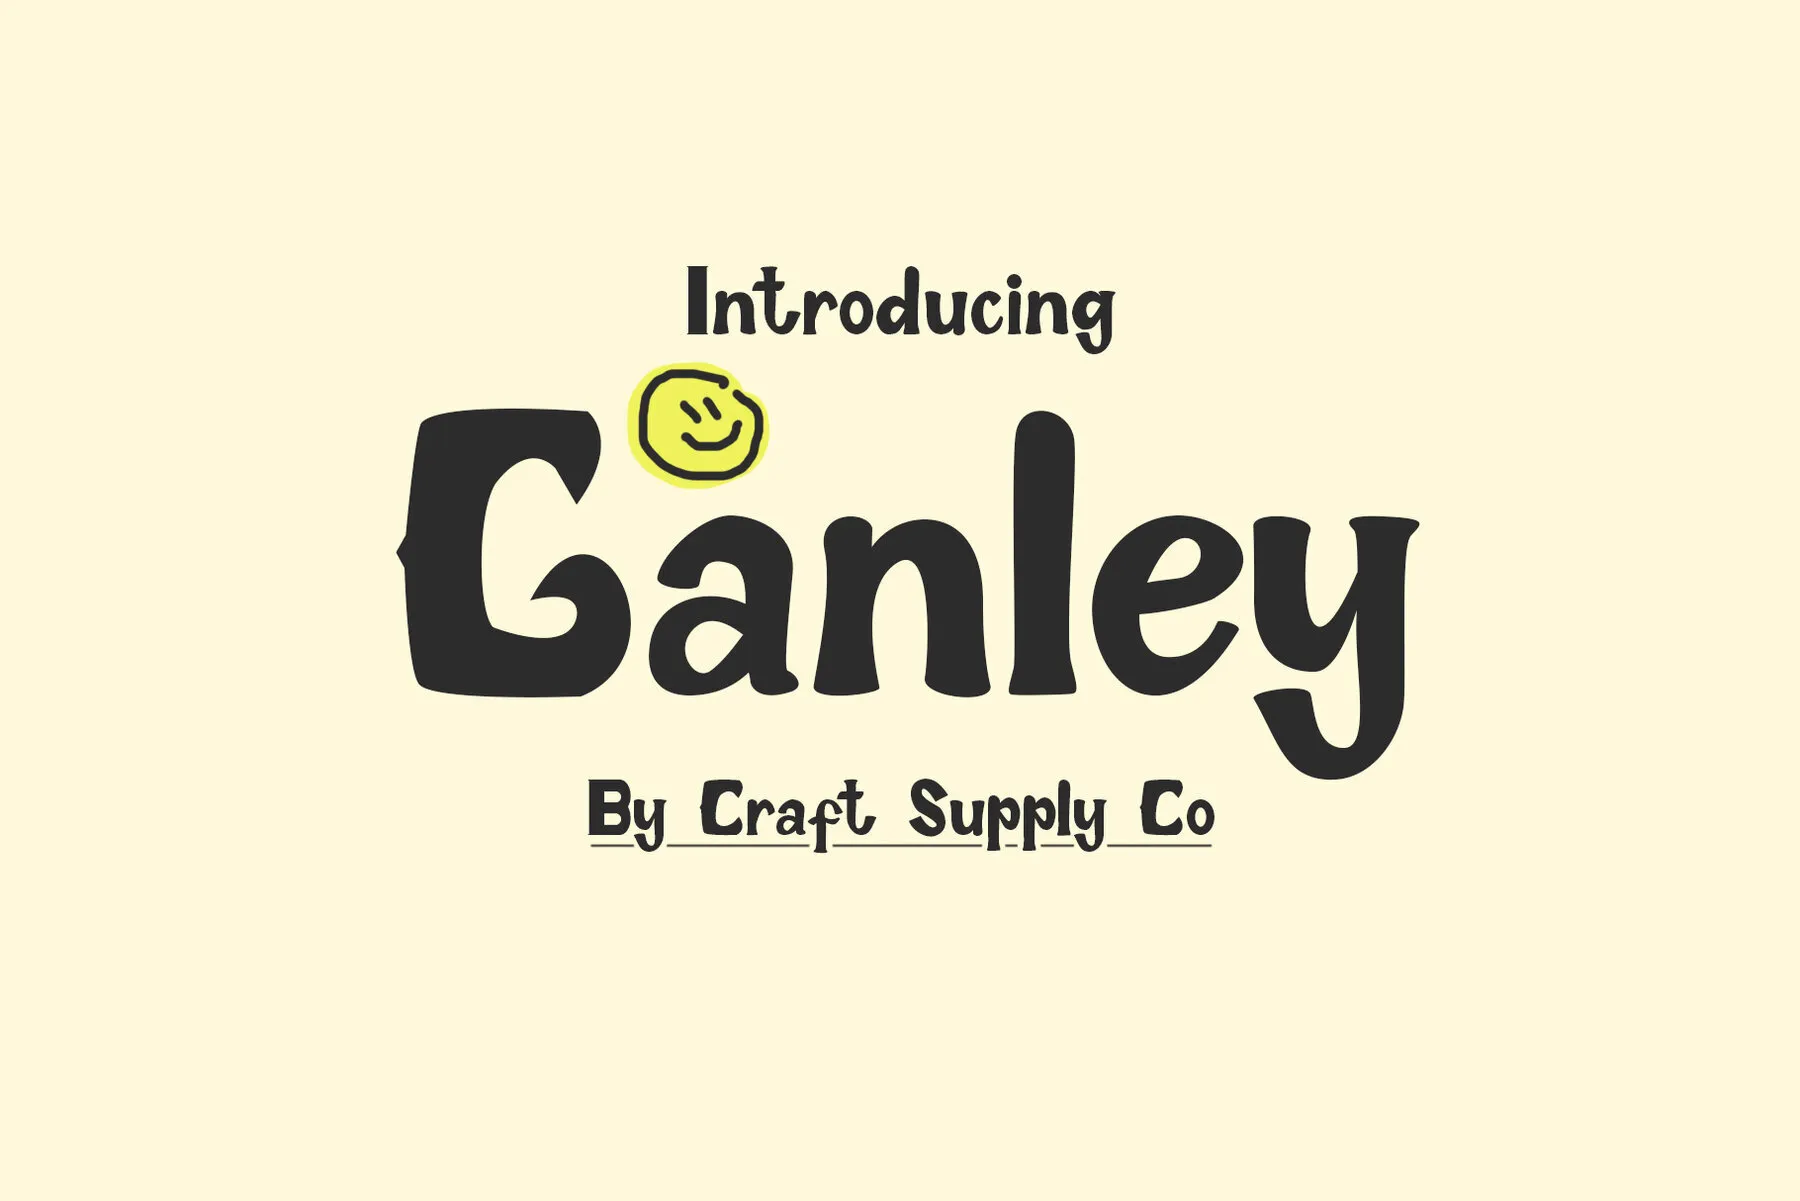 Ganley